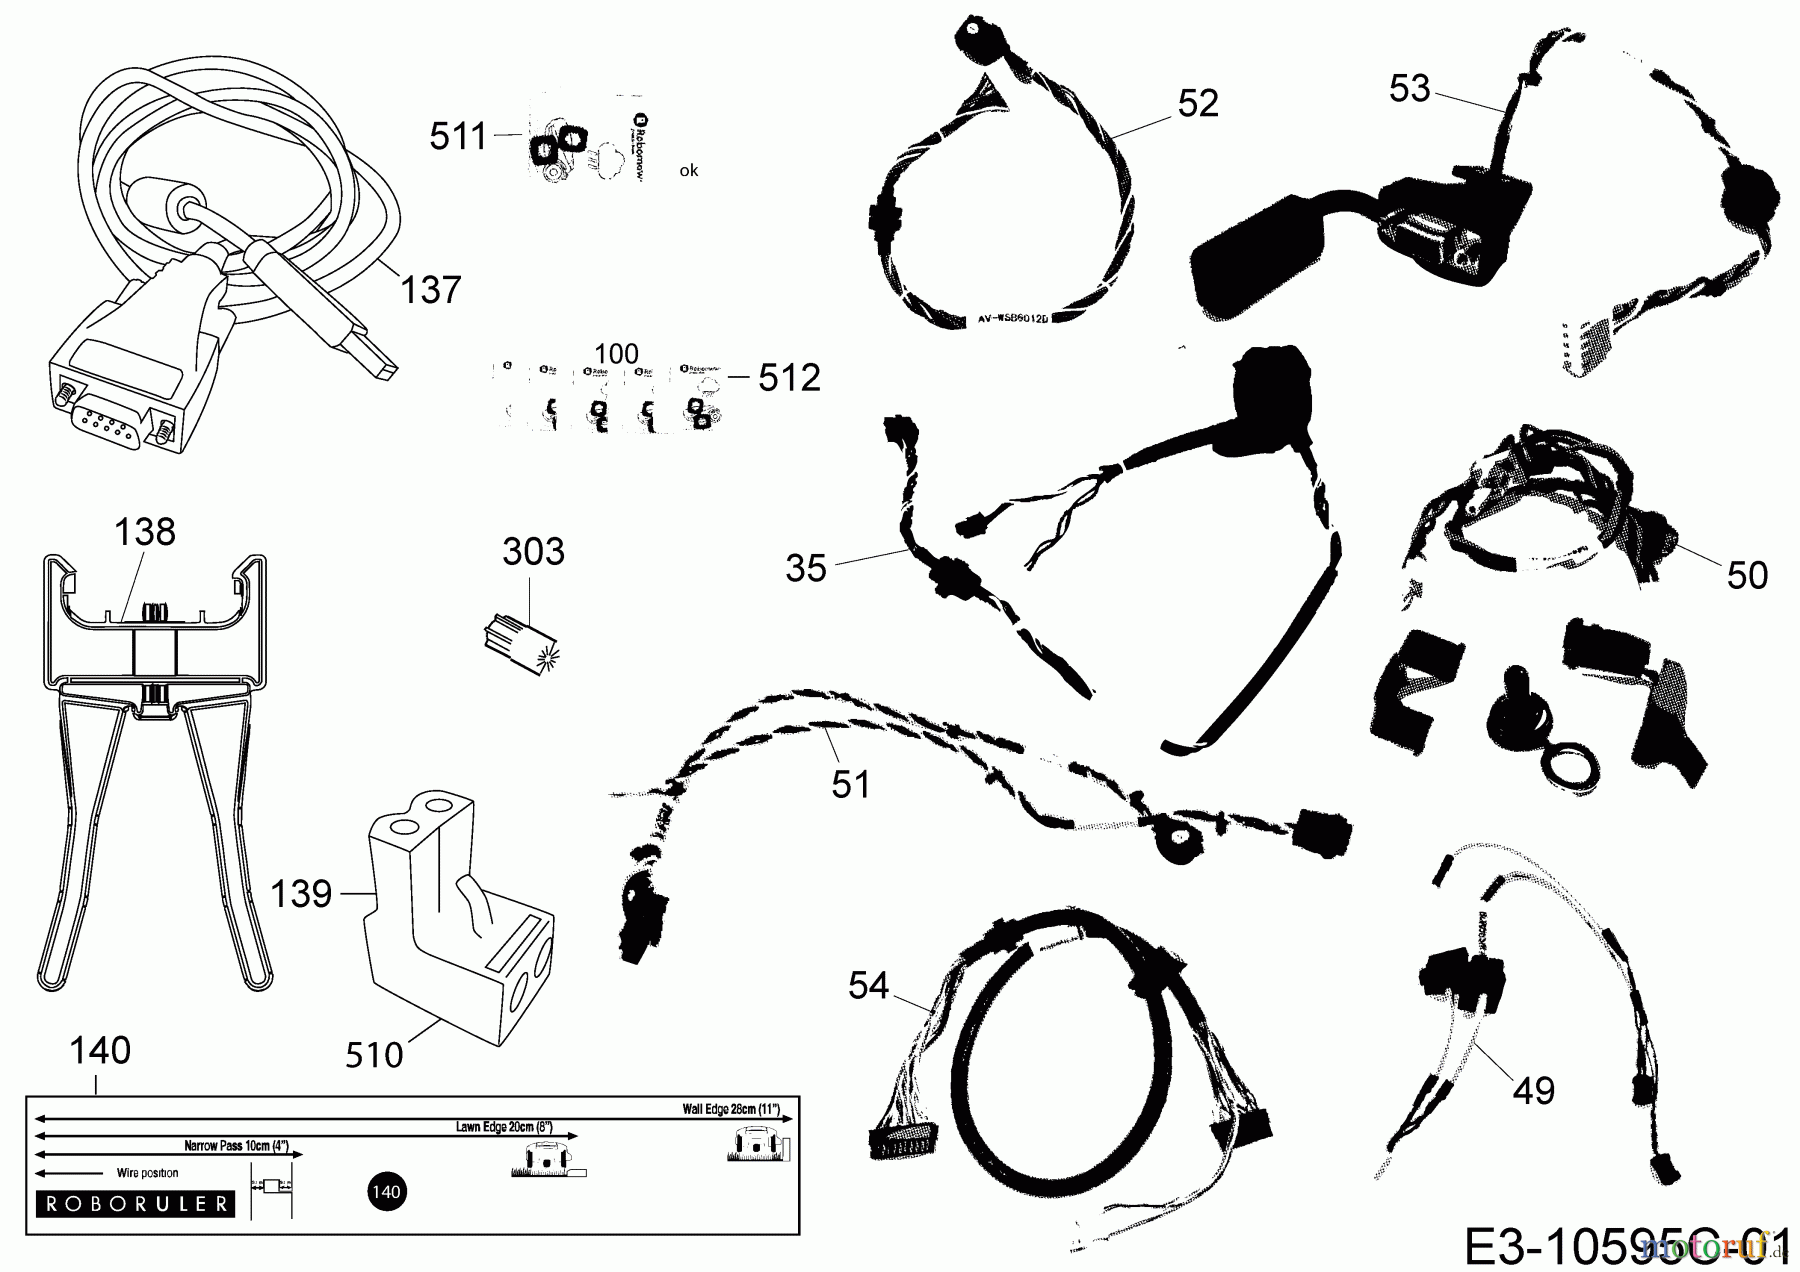  Robomow Mähroboter MS 1800 (Black) PRD6200P1  (2015) Kabel, Kabelanschluß, Regensensor, Werkzeug